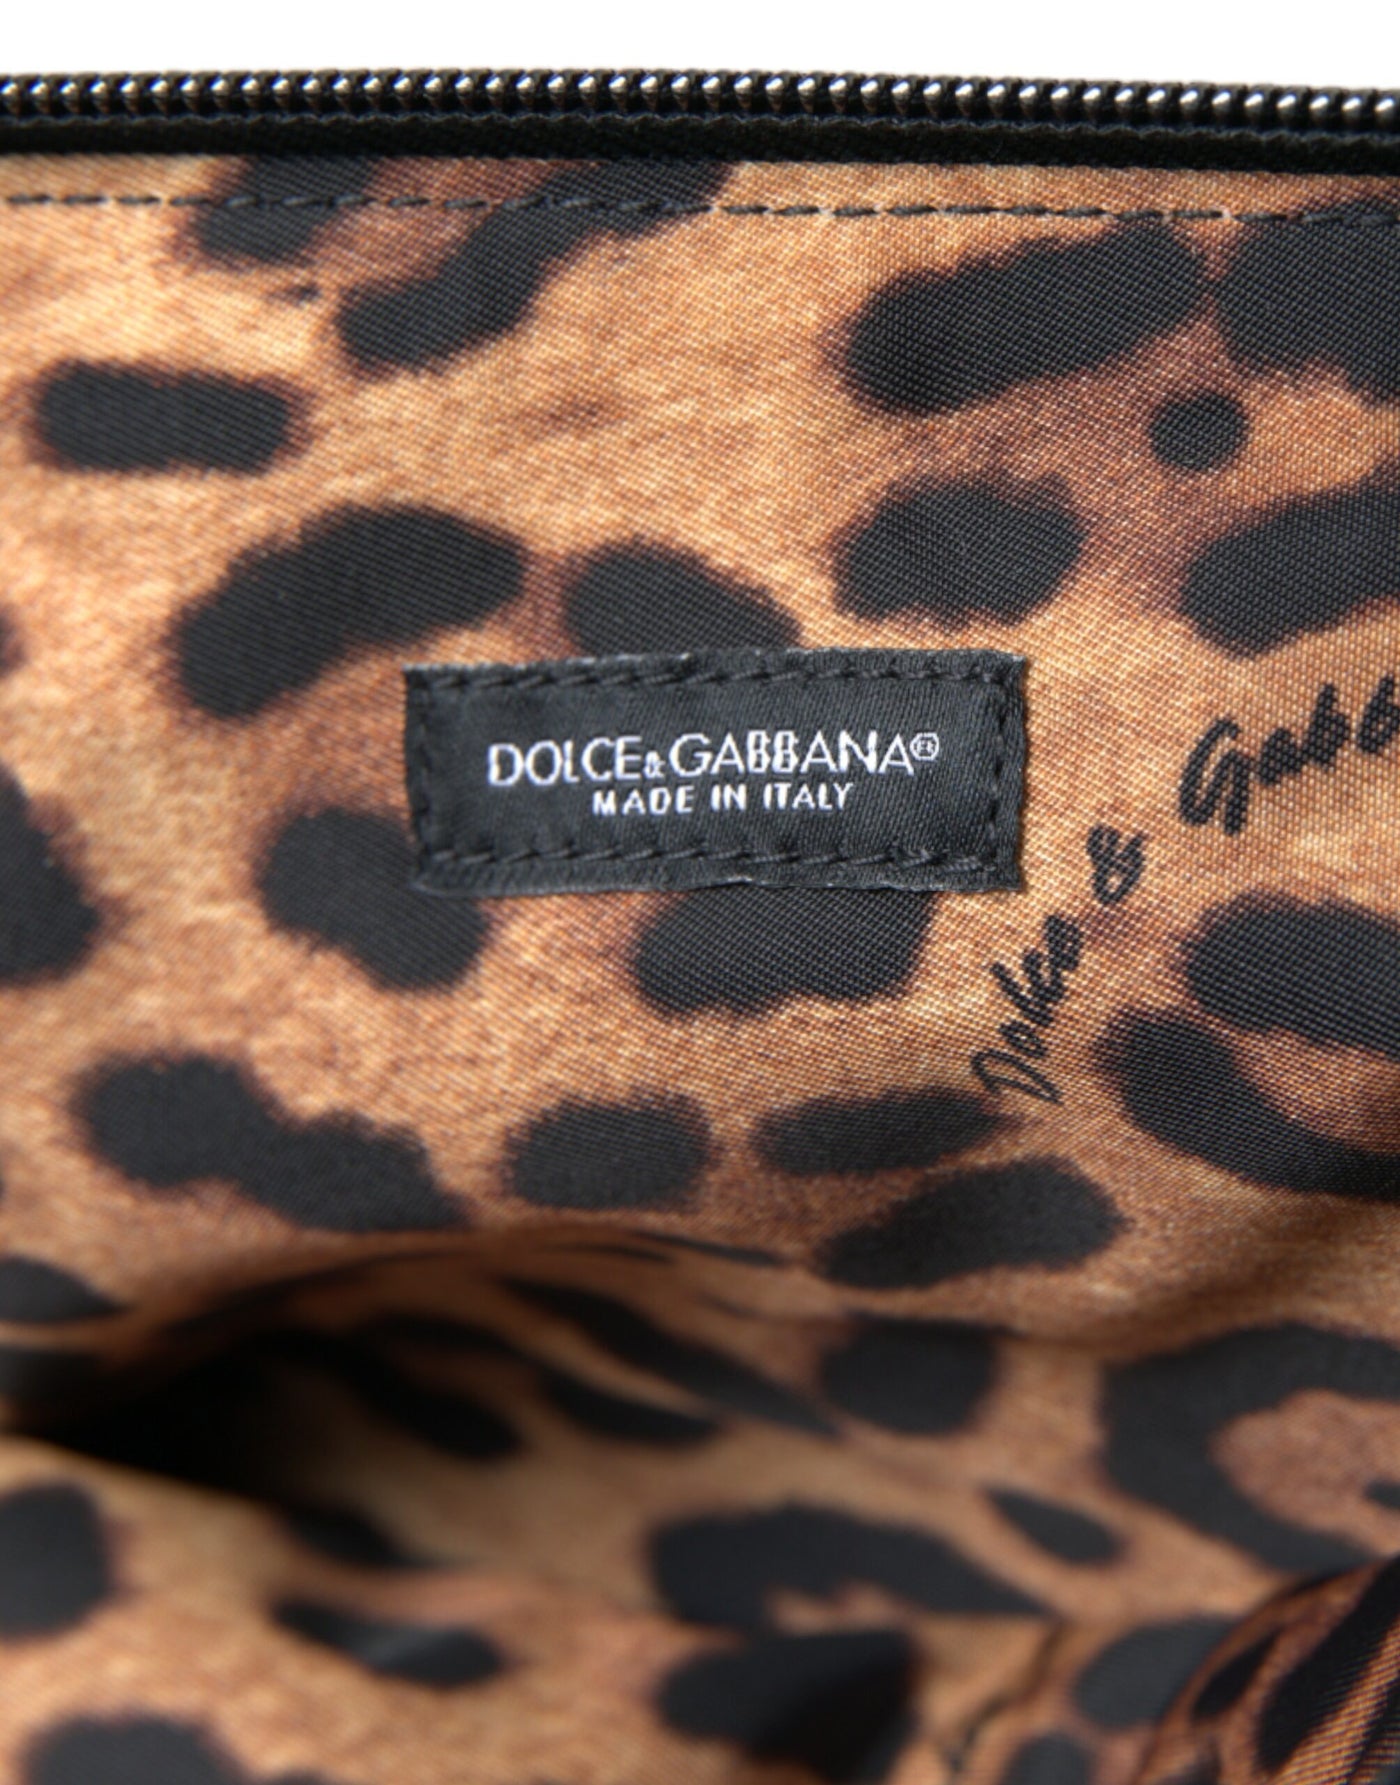 Dolce & Gabbana Elegant Blue Hand Pouch with Strap